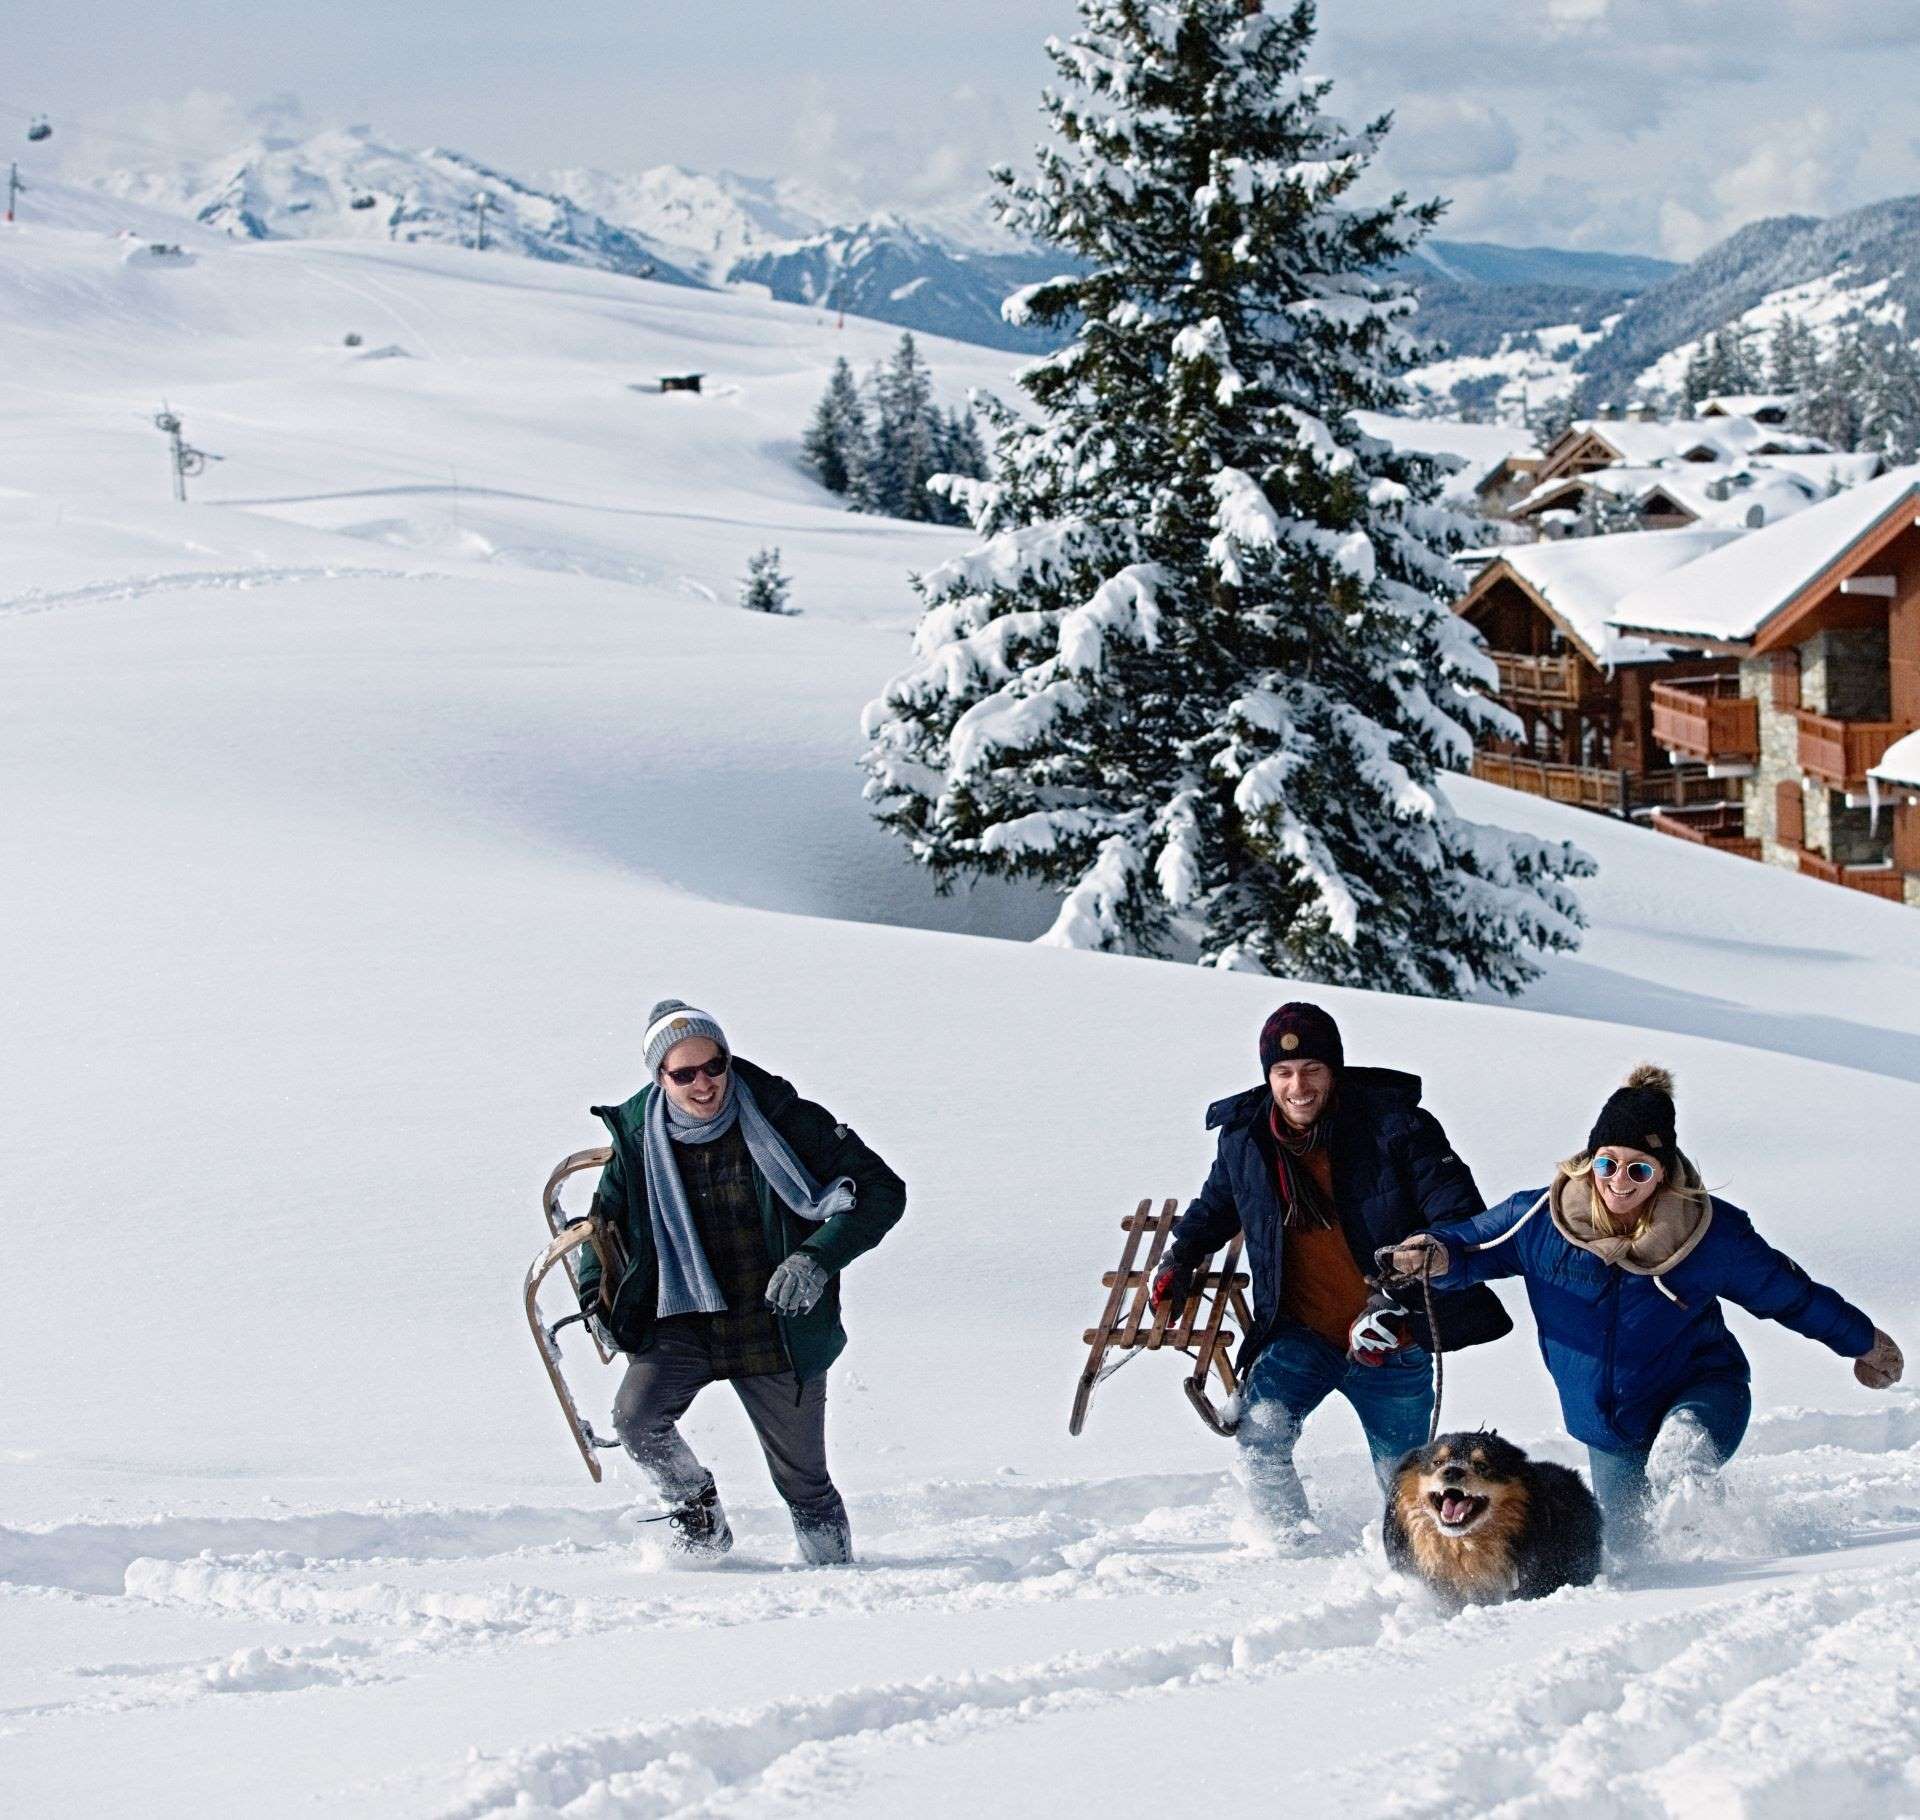 Courchevel-neige-famille-station-ski-3-vallées-oxygene-ski-collection